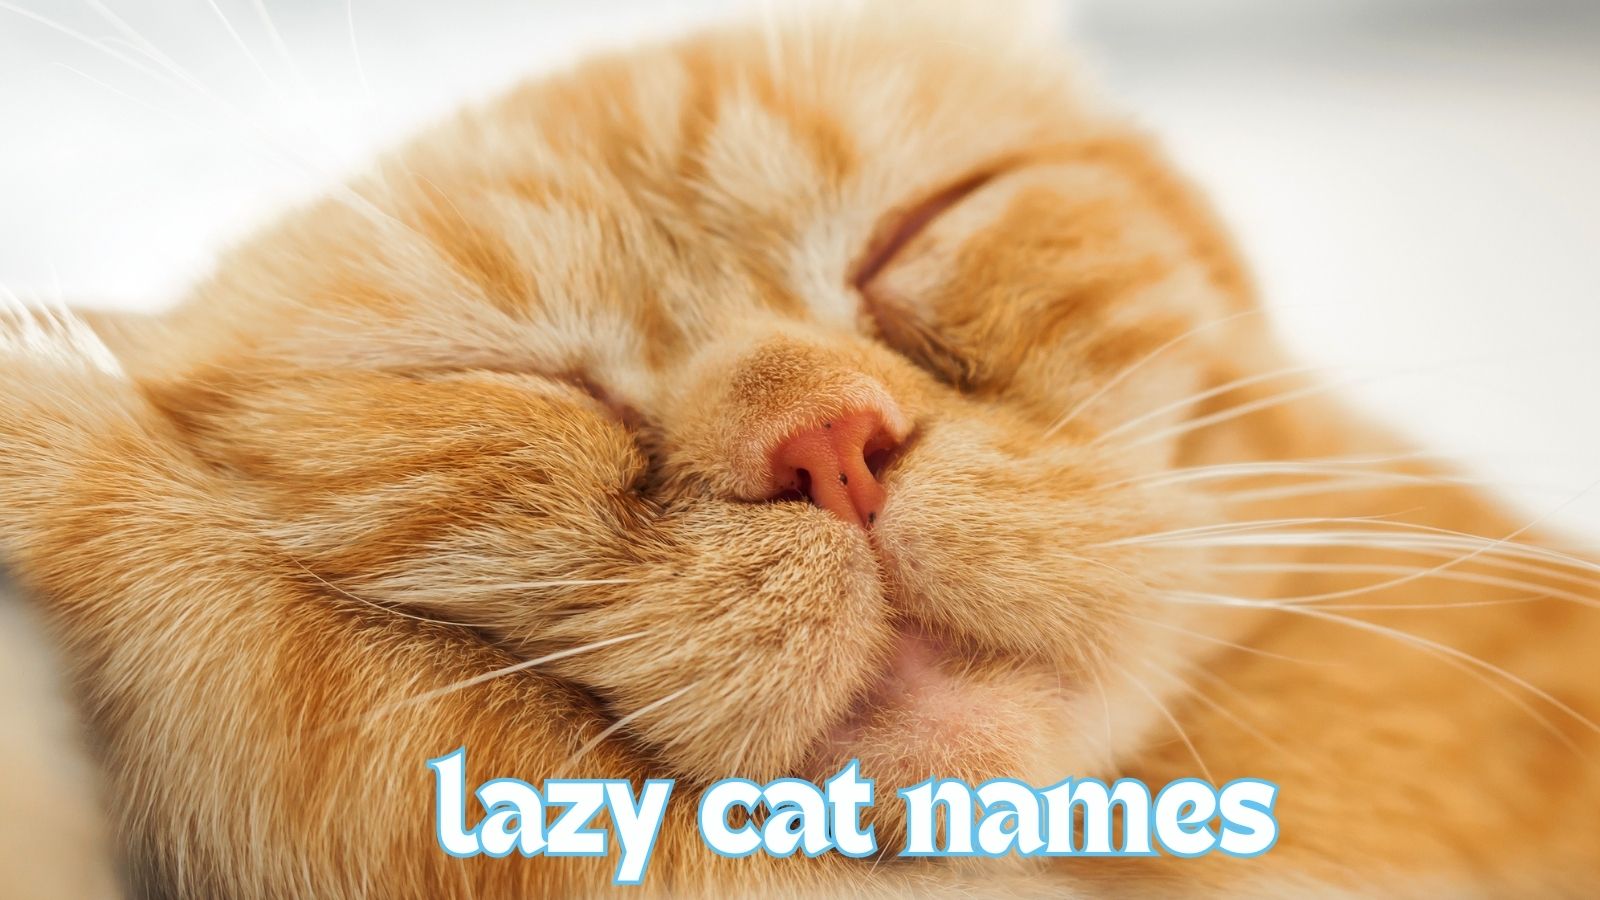 featured lazy pussaaaaay names